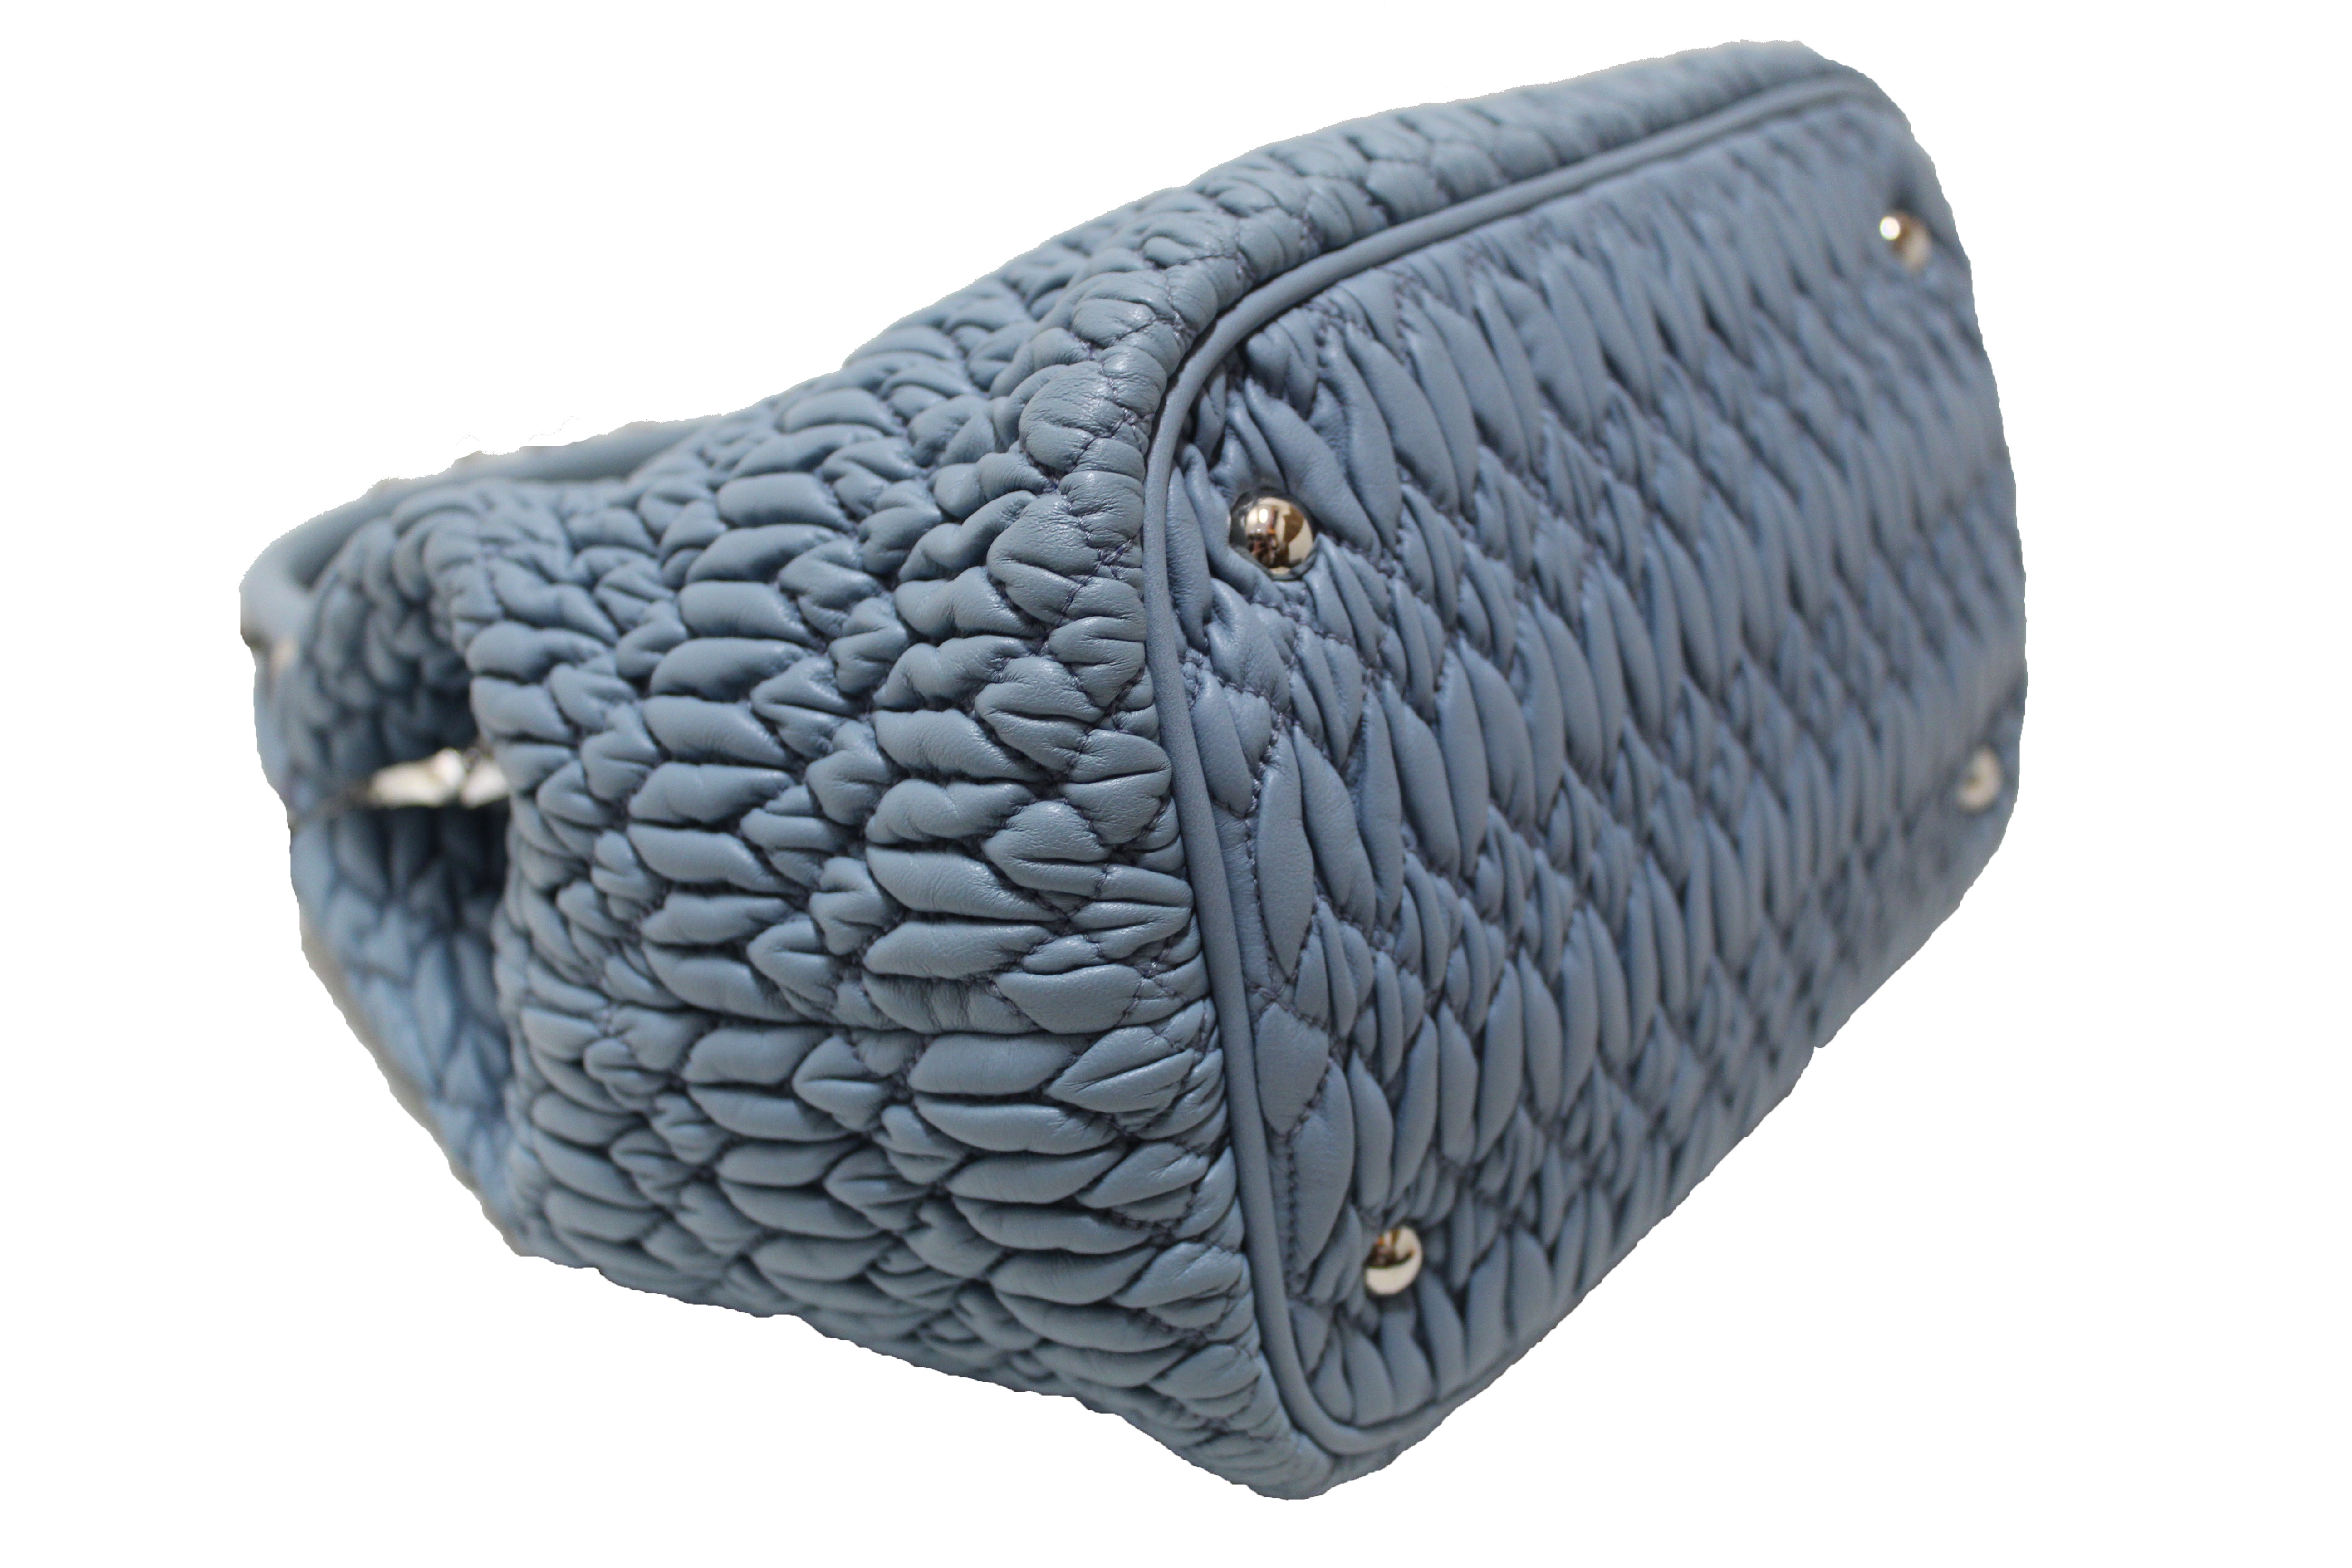 Authentic Miu Miu Crystal Blue Cloqué Nappa Leather Handbag